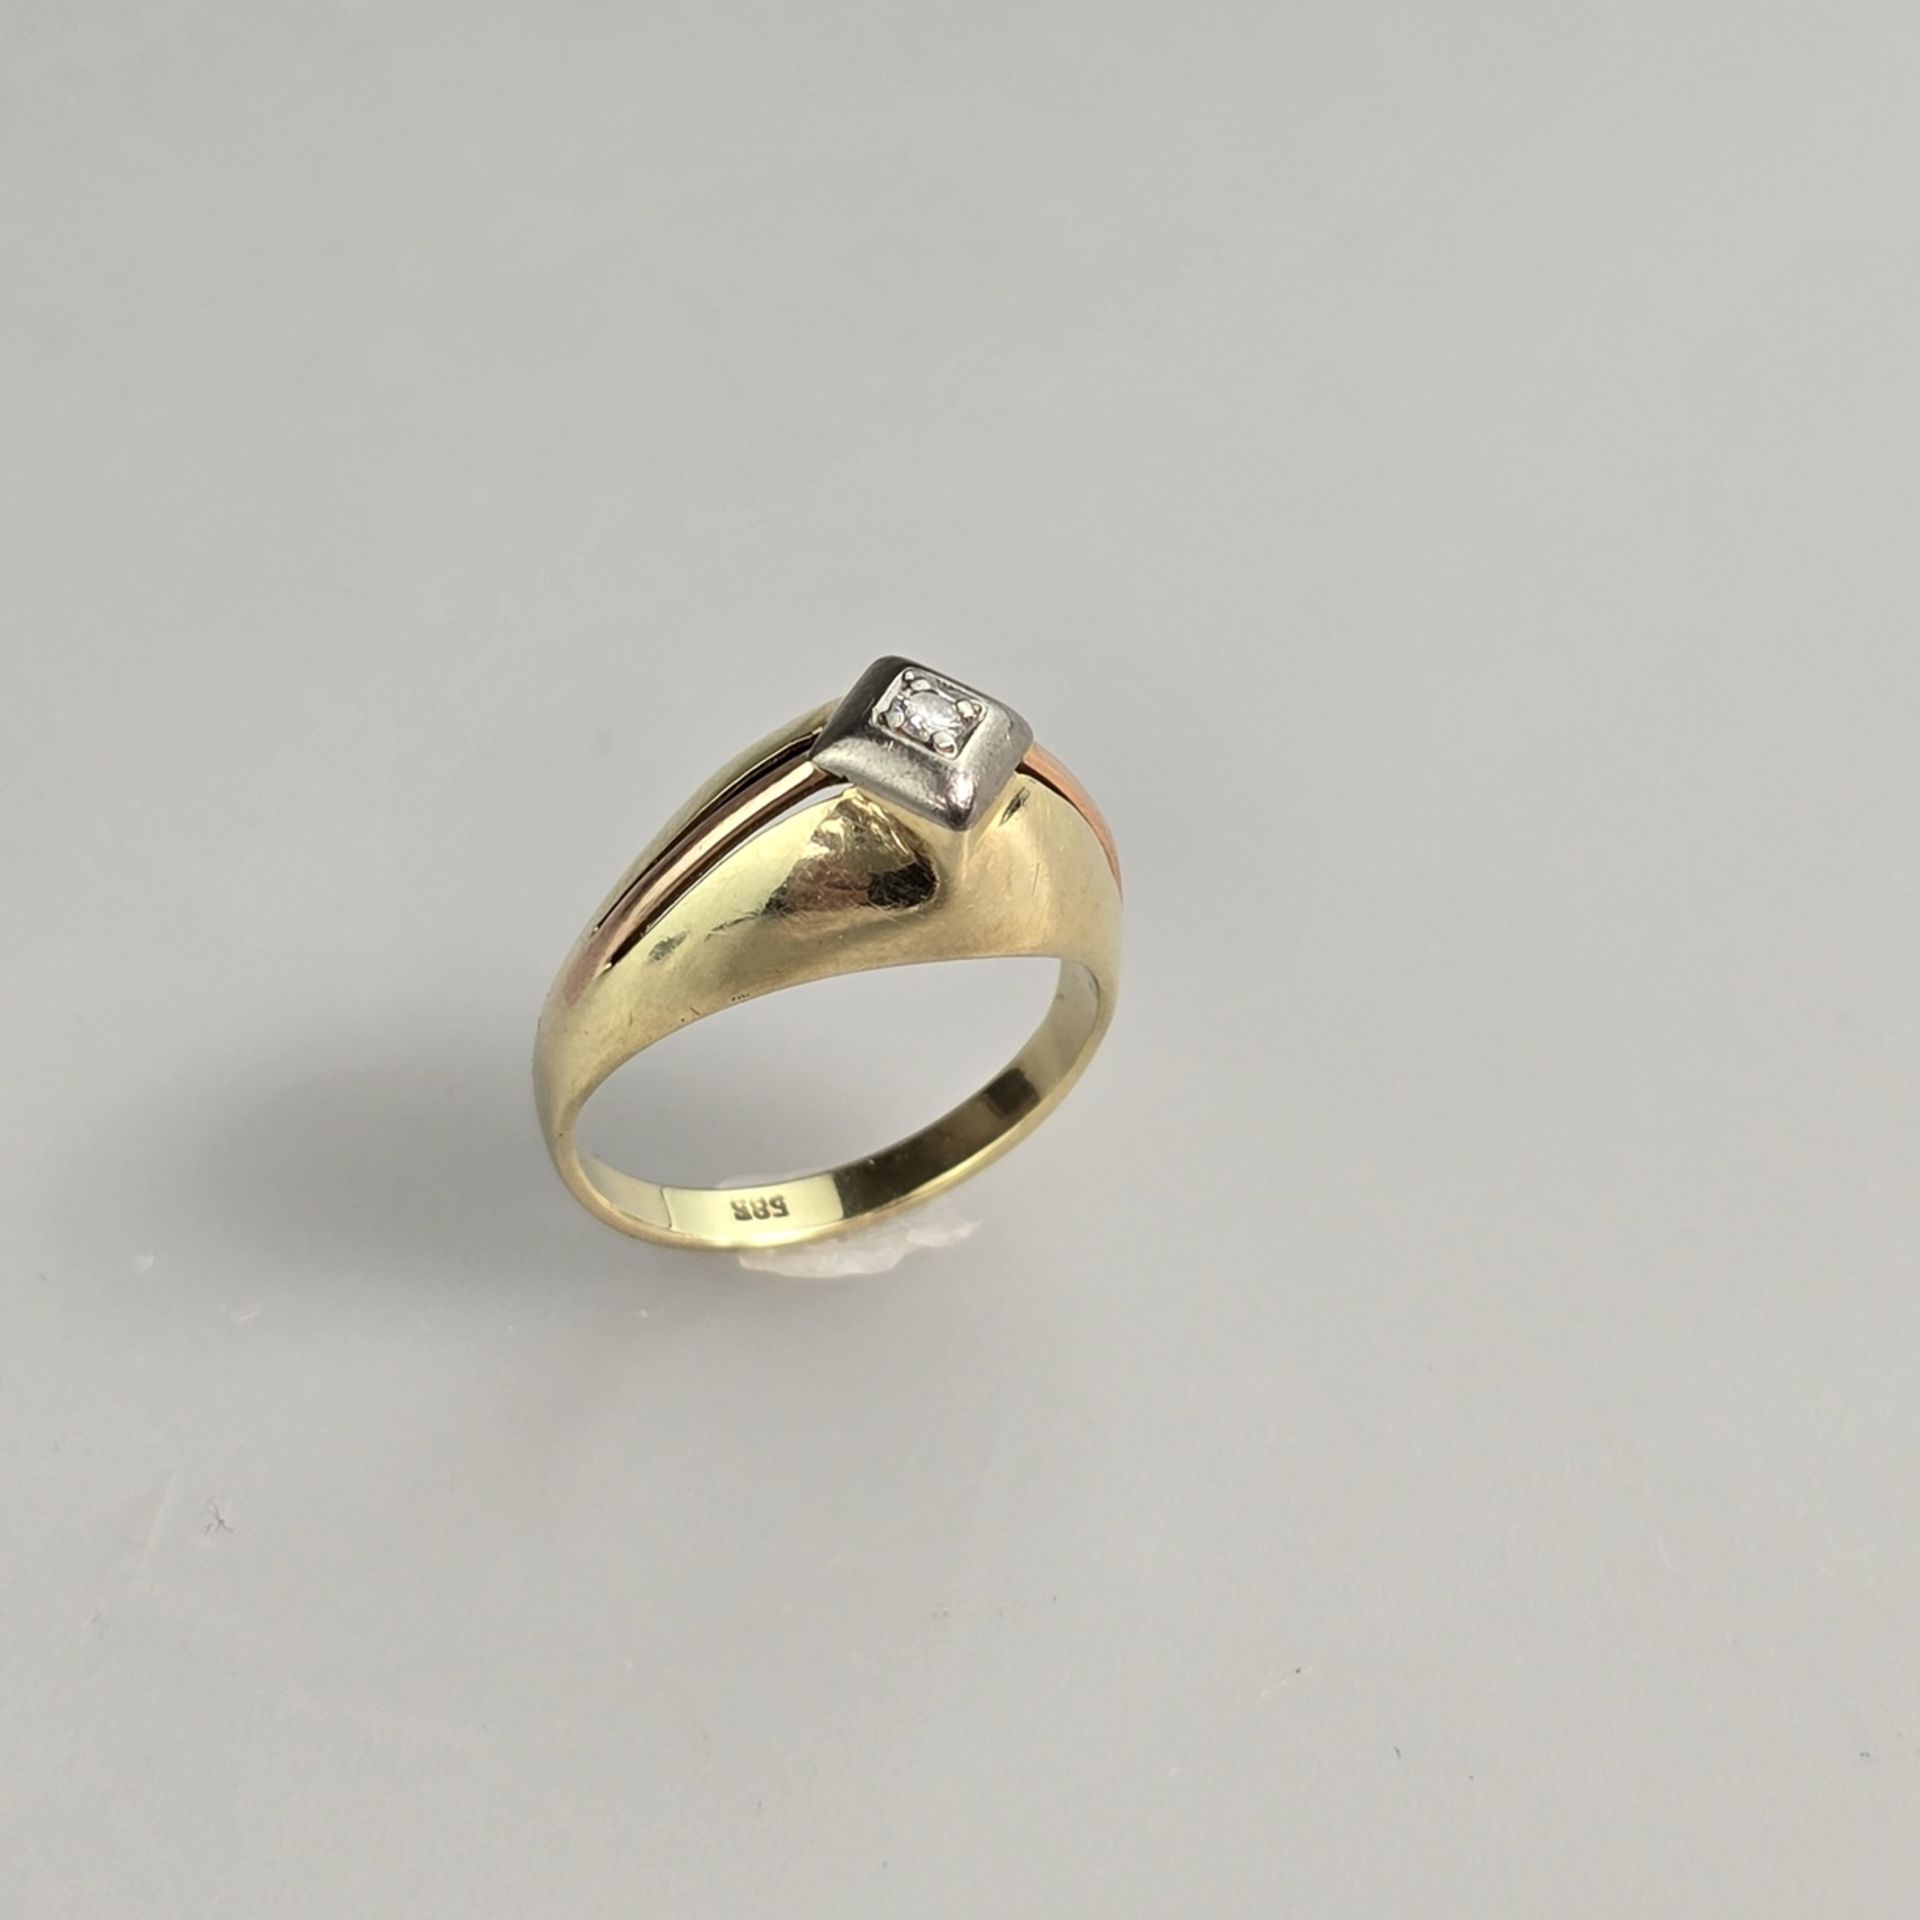 Diamantring - Rot-/Gelbgold 585/000 (14K), gestempelt, spitzbogig gekuppelter Ringkopf besetzt mit